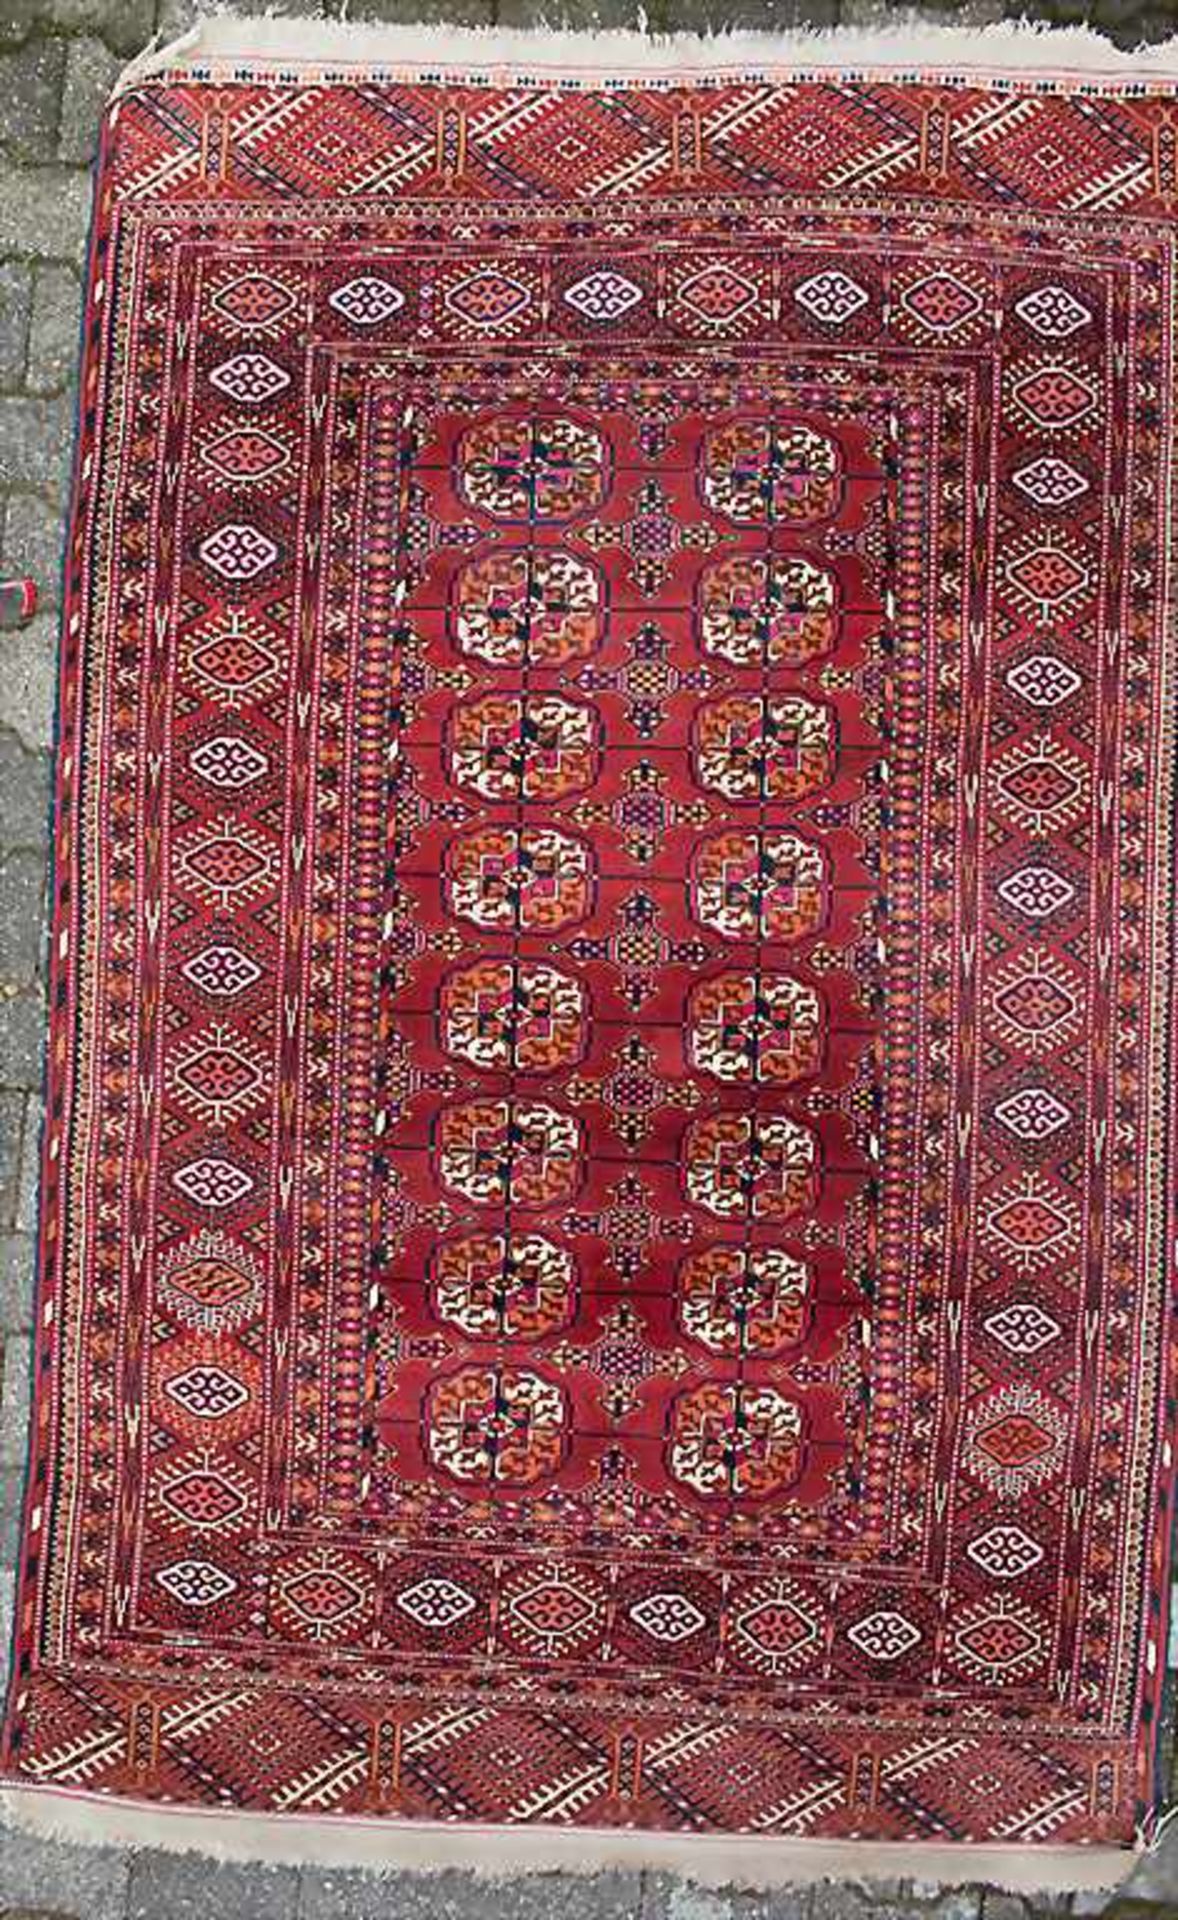 Orientteppich 'Belutsch' / An oriental carpet 'Belutsh'Material: Wolle, Maße: 218 x 135 cm, Zustand: